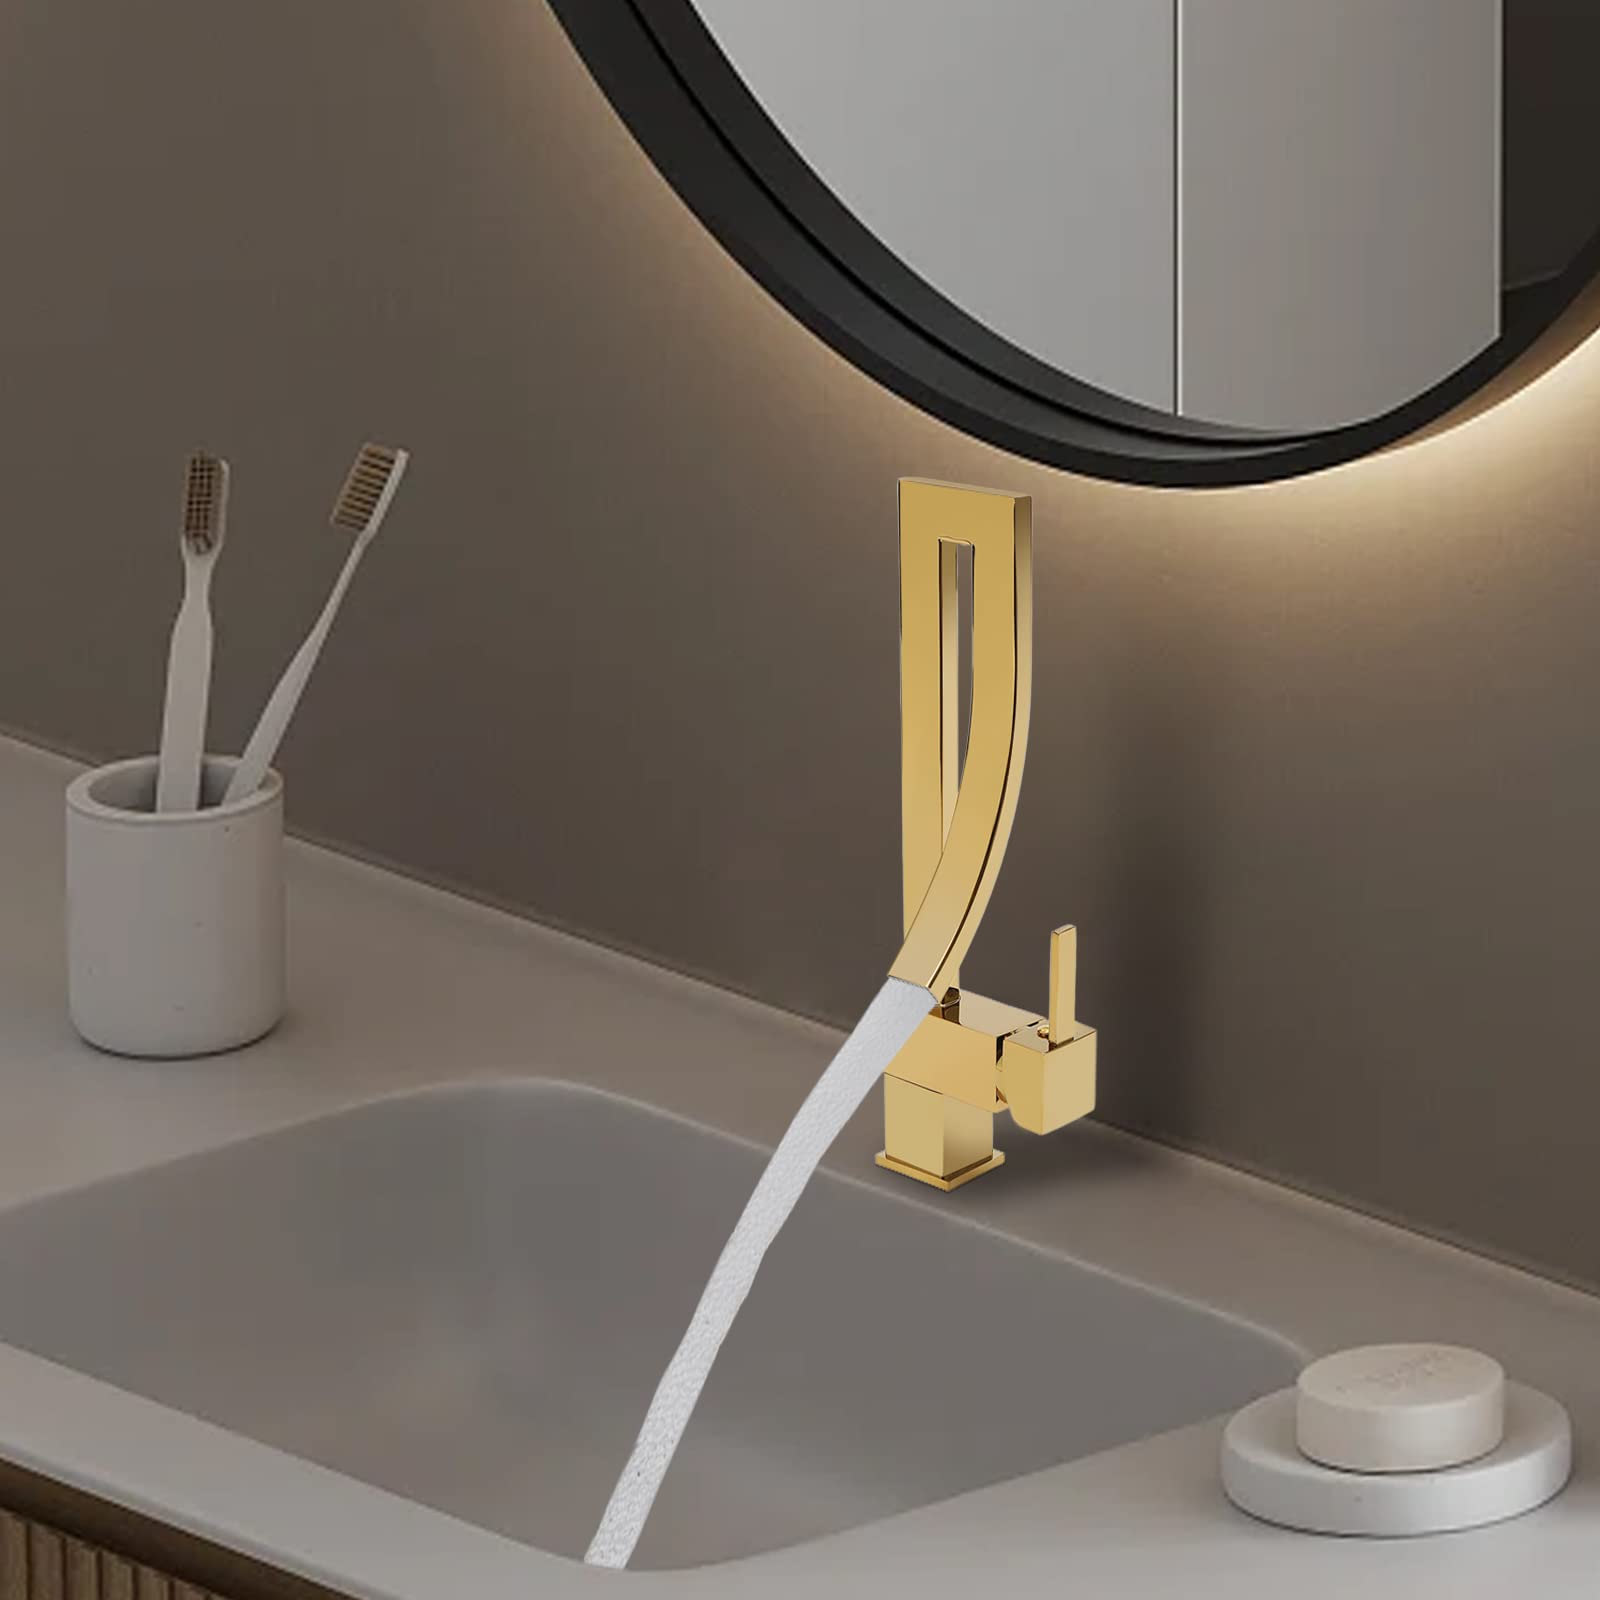 Robinet mitigeur de salle de bain - Design moderne